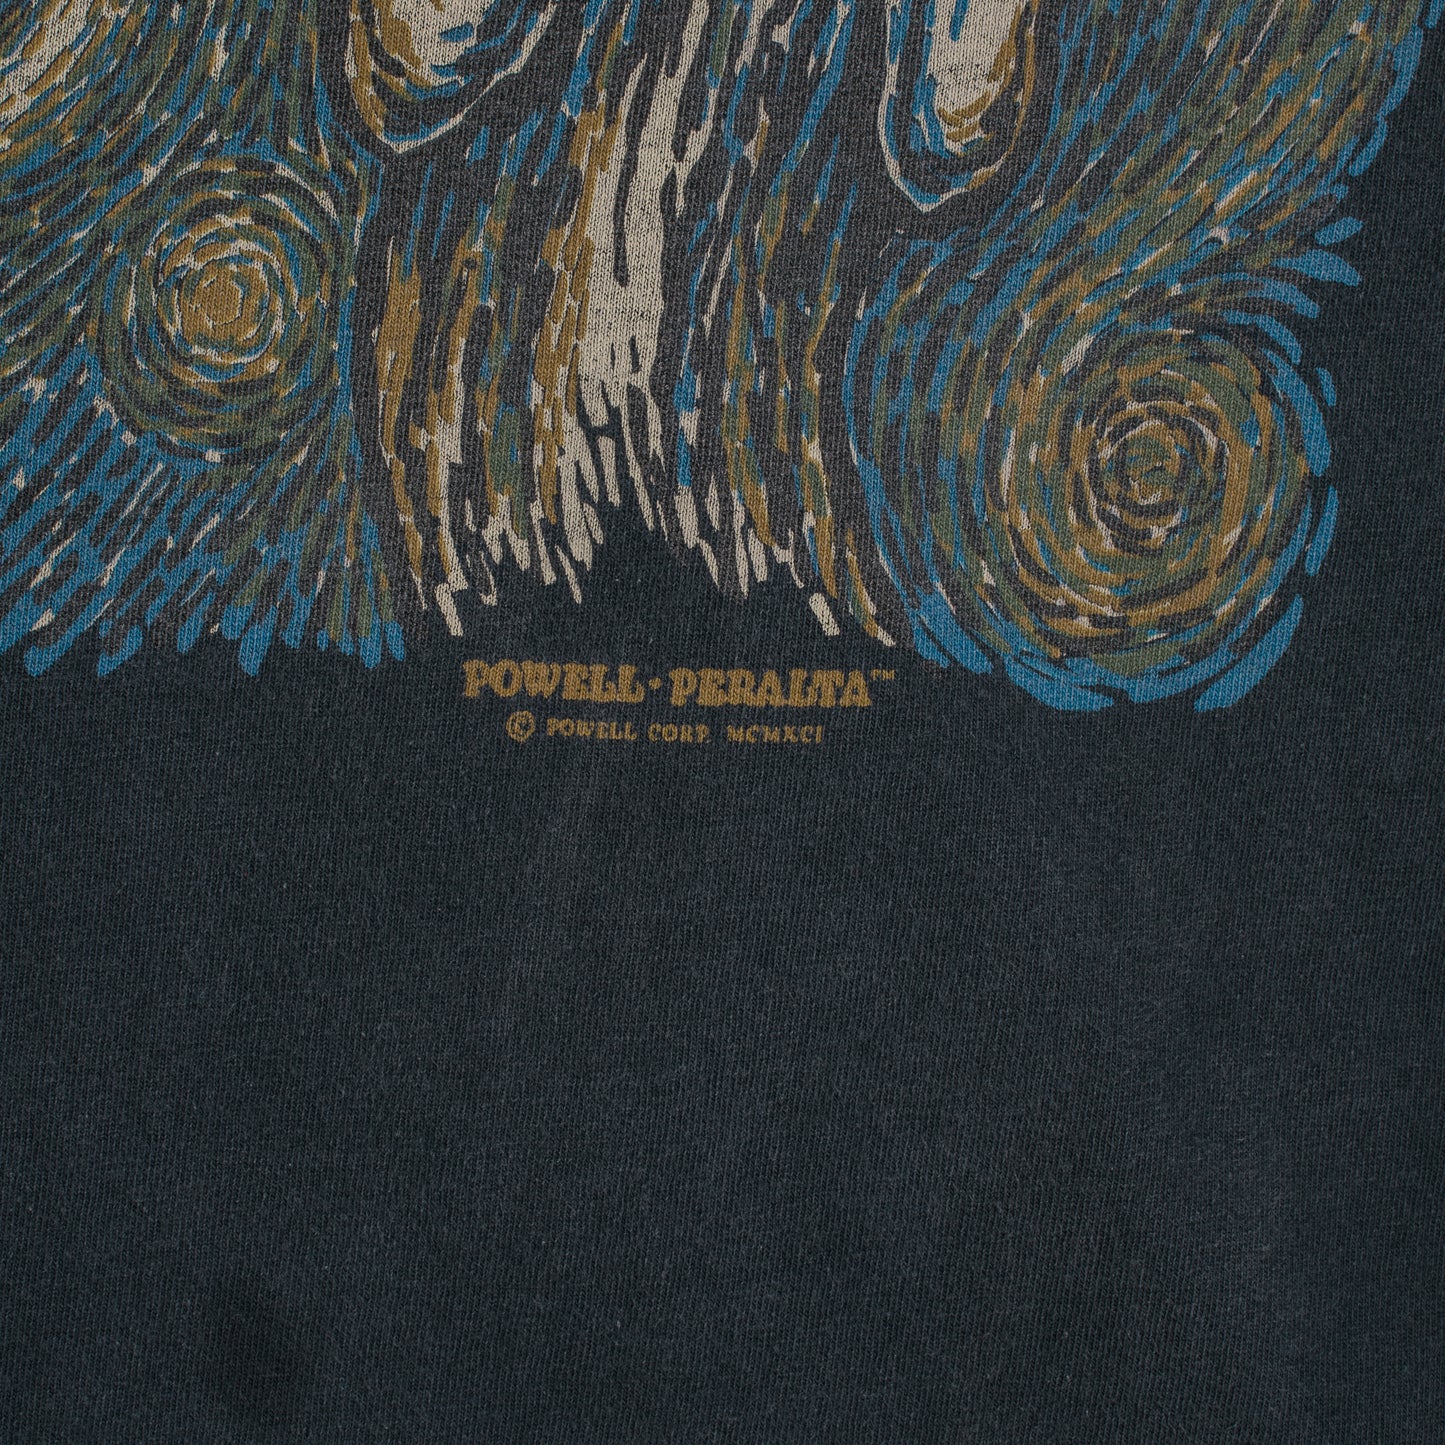 Vintage 1991 Powell Peralta The Scream Art T-Shirt